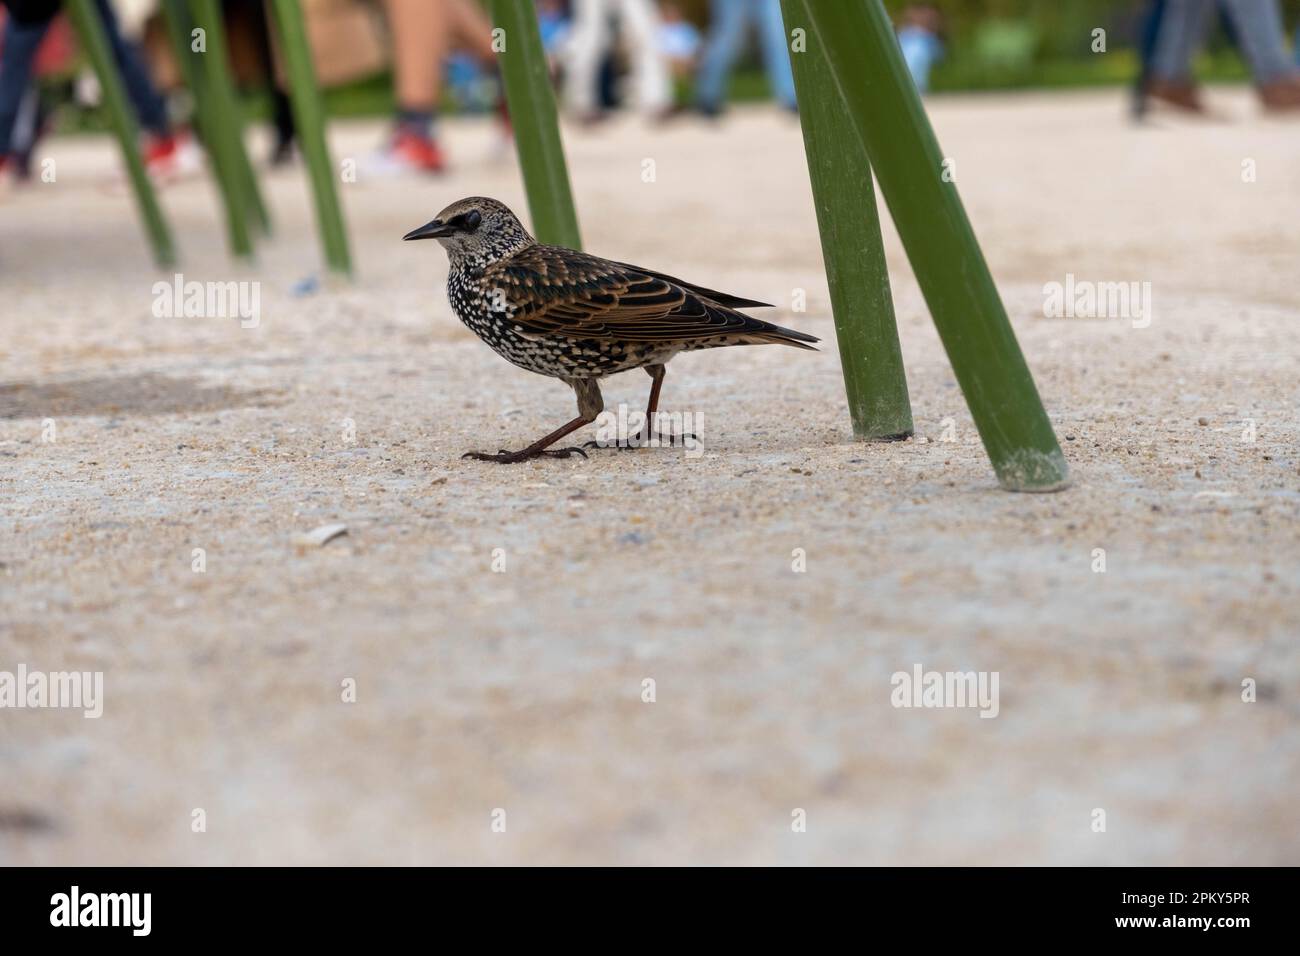 Zoomed-In Shot of European Starling Bird on Sandy Floor Stock Photo